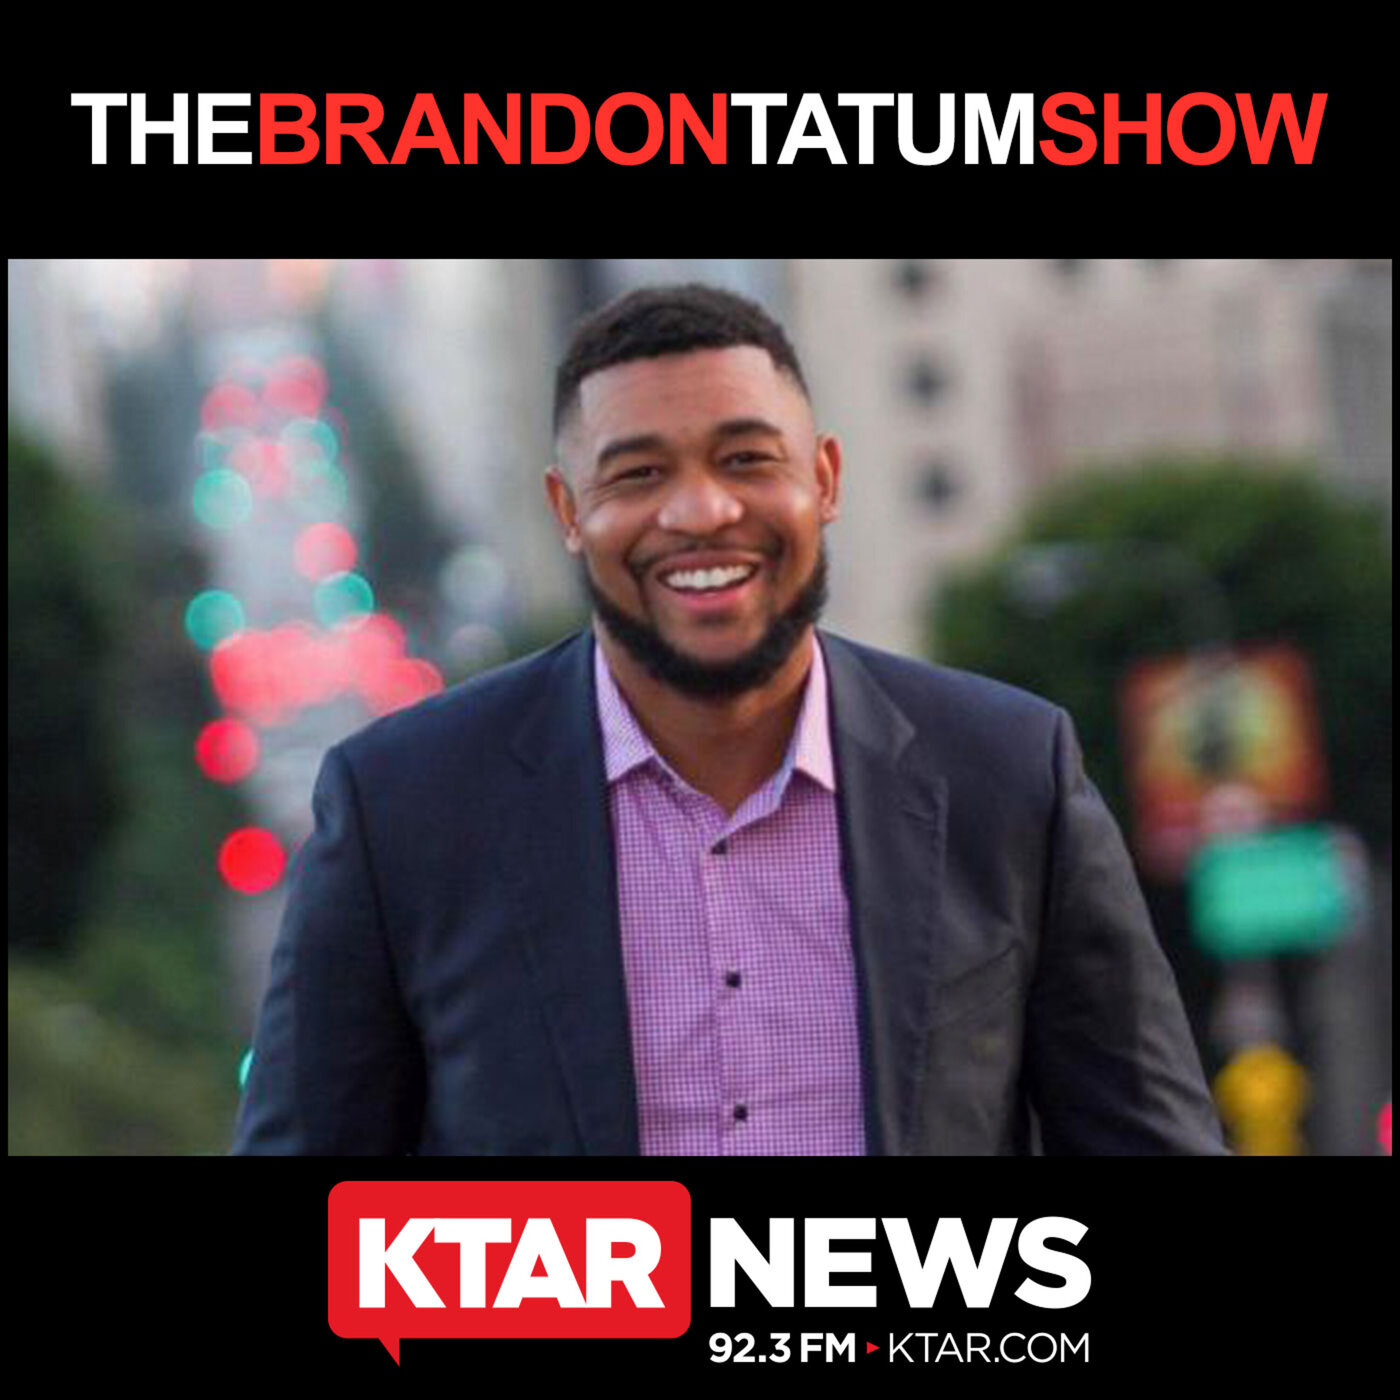 February 1, 2020 - The Brandon Tatum Show